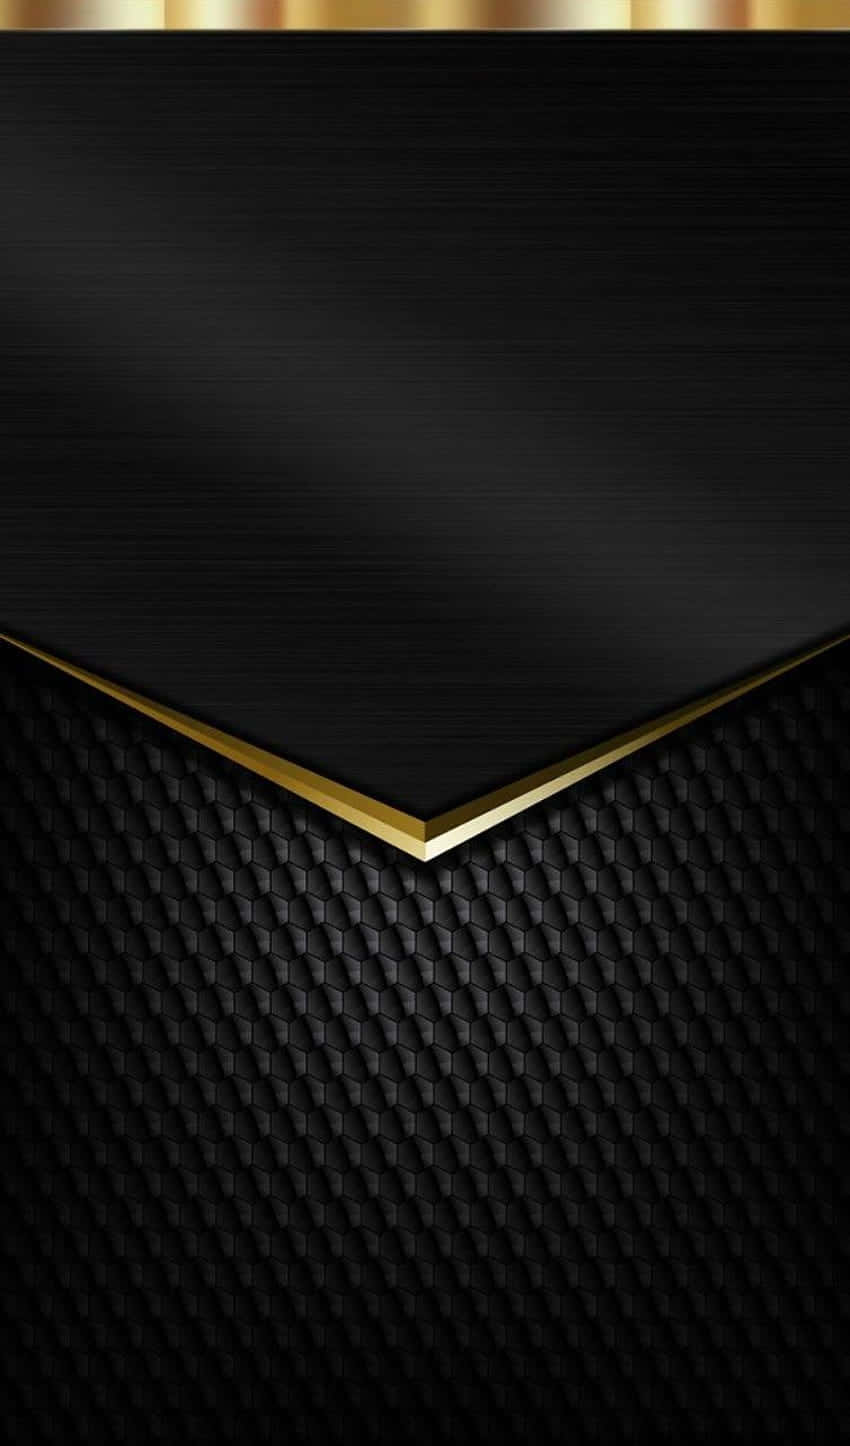 V-shaped Metal Gold And Black Background